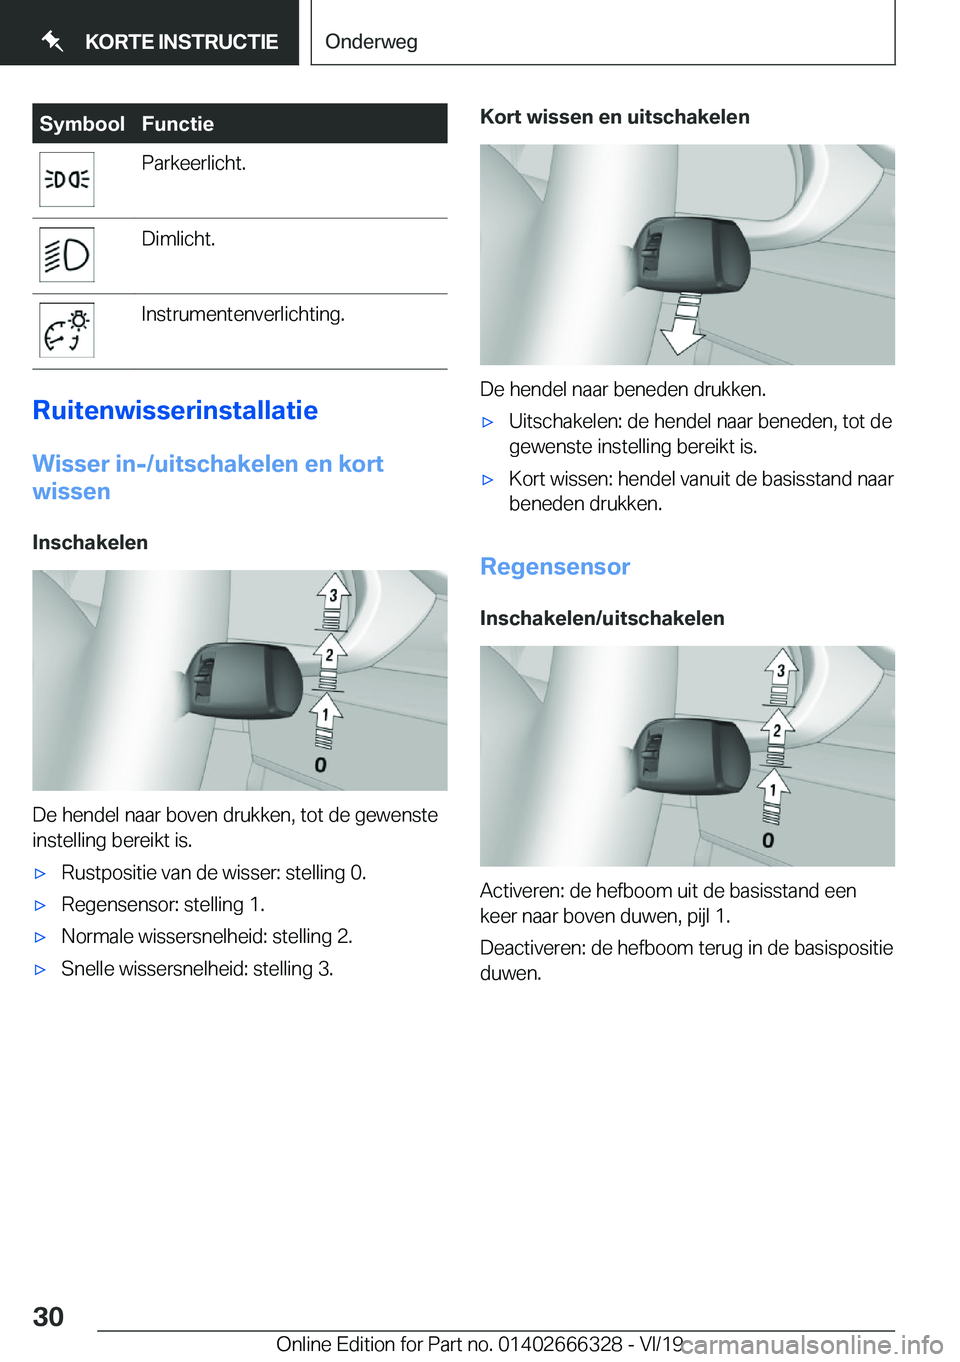 BMW 4 SERIES COUPE 2020  Instructieboekjes (in Dutch) �S�y�m�b�o�o�l�F�u�n�c�t�i�e�P�a�r�k�e�e�r�l�i�c�h�t�.�D�i�m�l�i�c�h�t�.�I�n�s�t�r�u�m�e�n�t�e�n�v�e�r�l�i�c�h�t�i�n�g�.
�R�u�i�t�e�n�w�i�s�s�e�r�i�n�s�t�a�l�l�a�t�i�e�W�i�s�s�e�r��i�n�-�/�u�i�t�s�c�